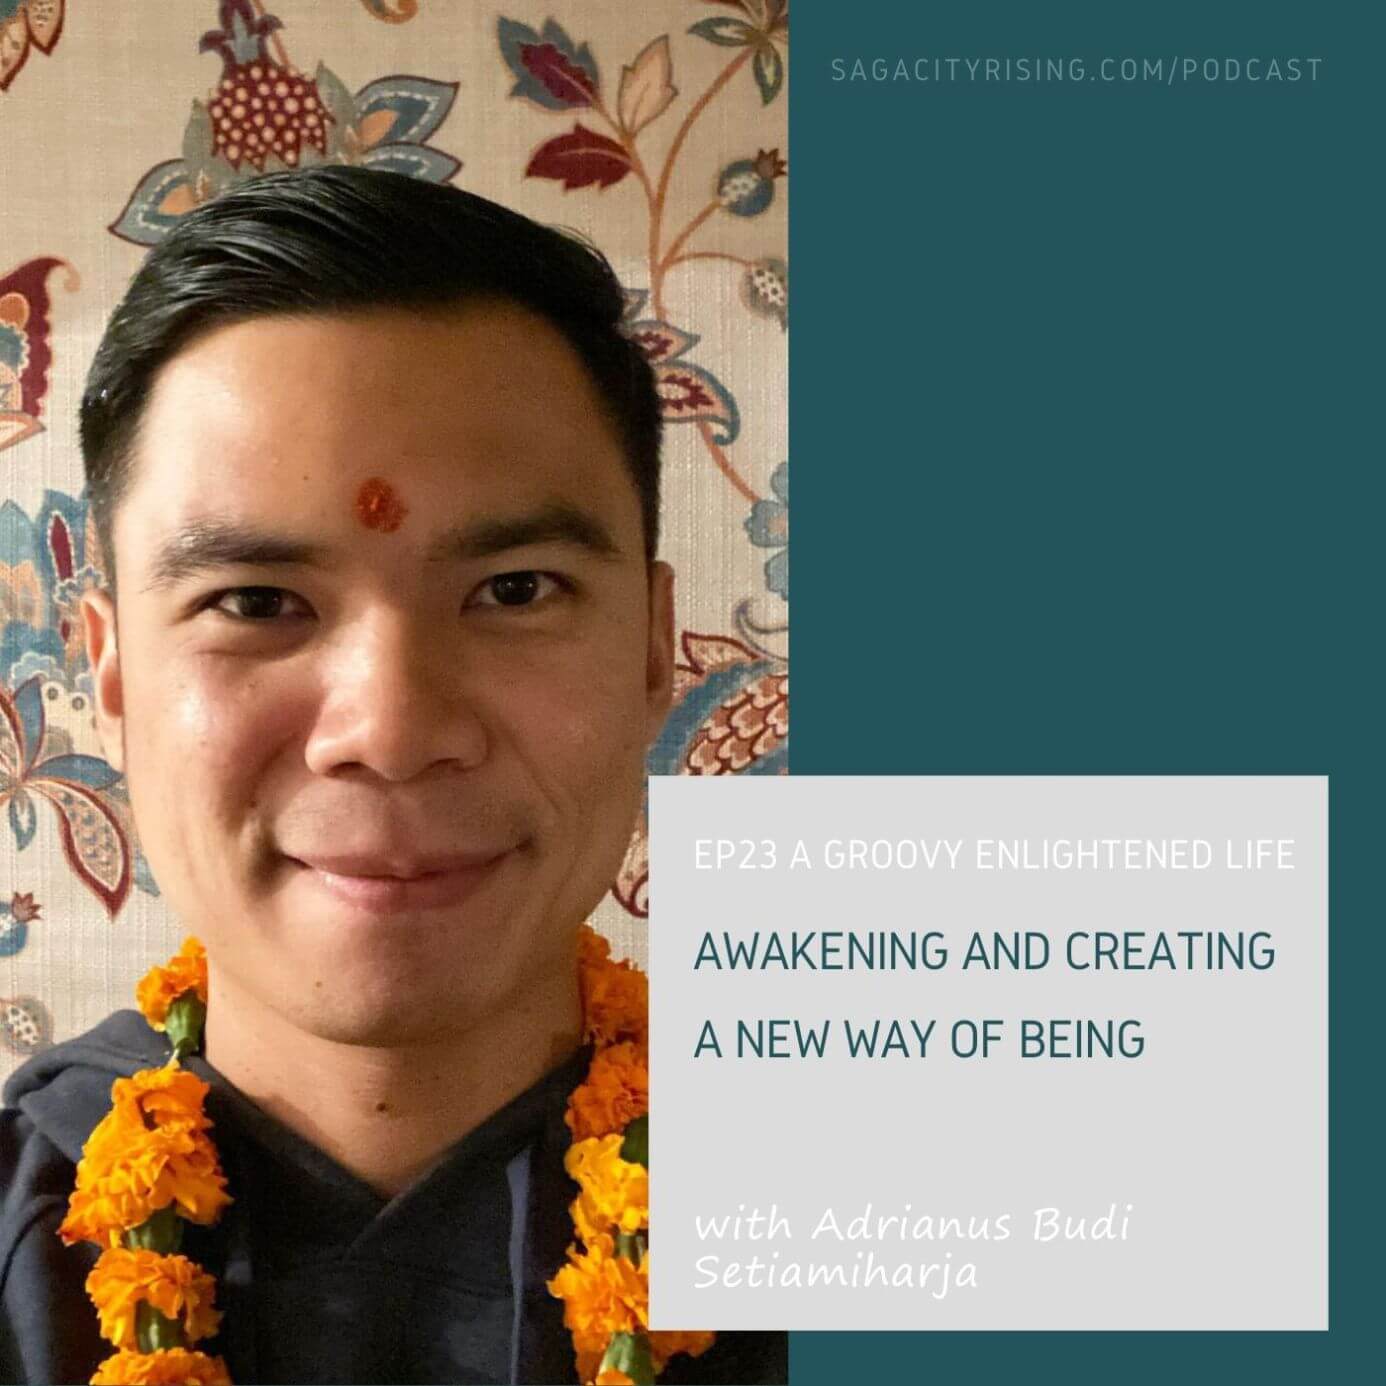 Awakening and Creating a New Way of Being with Adrianus Budi Setiamiharja